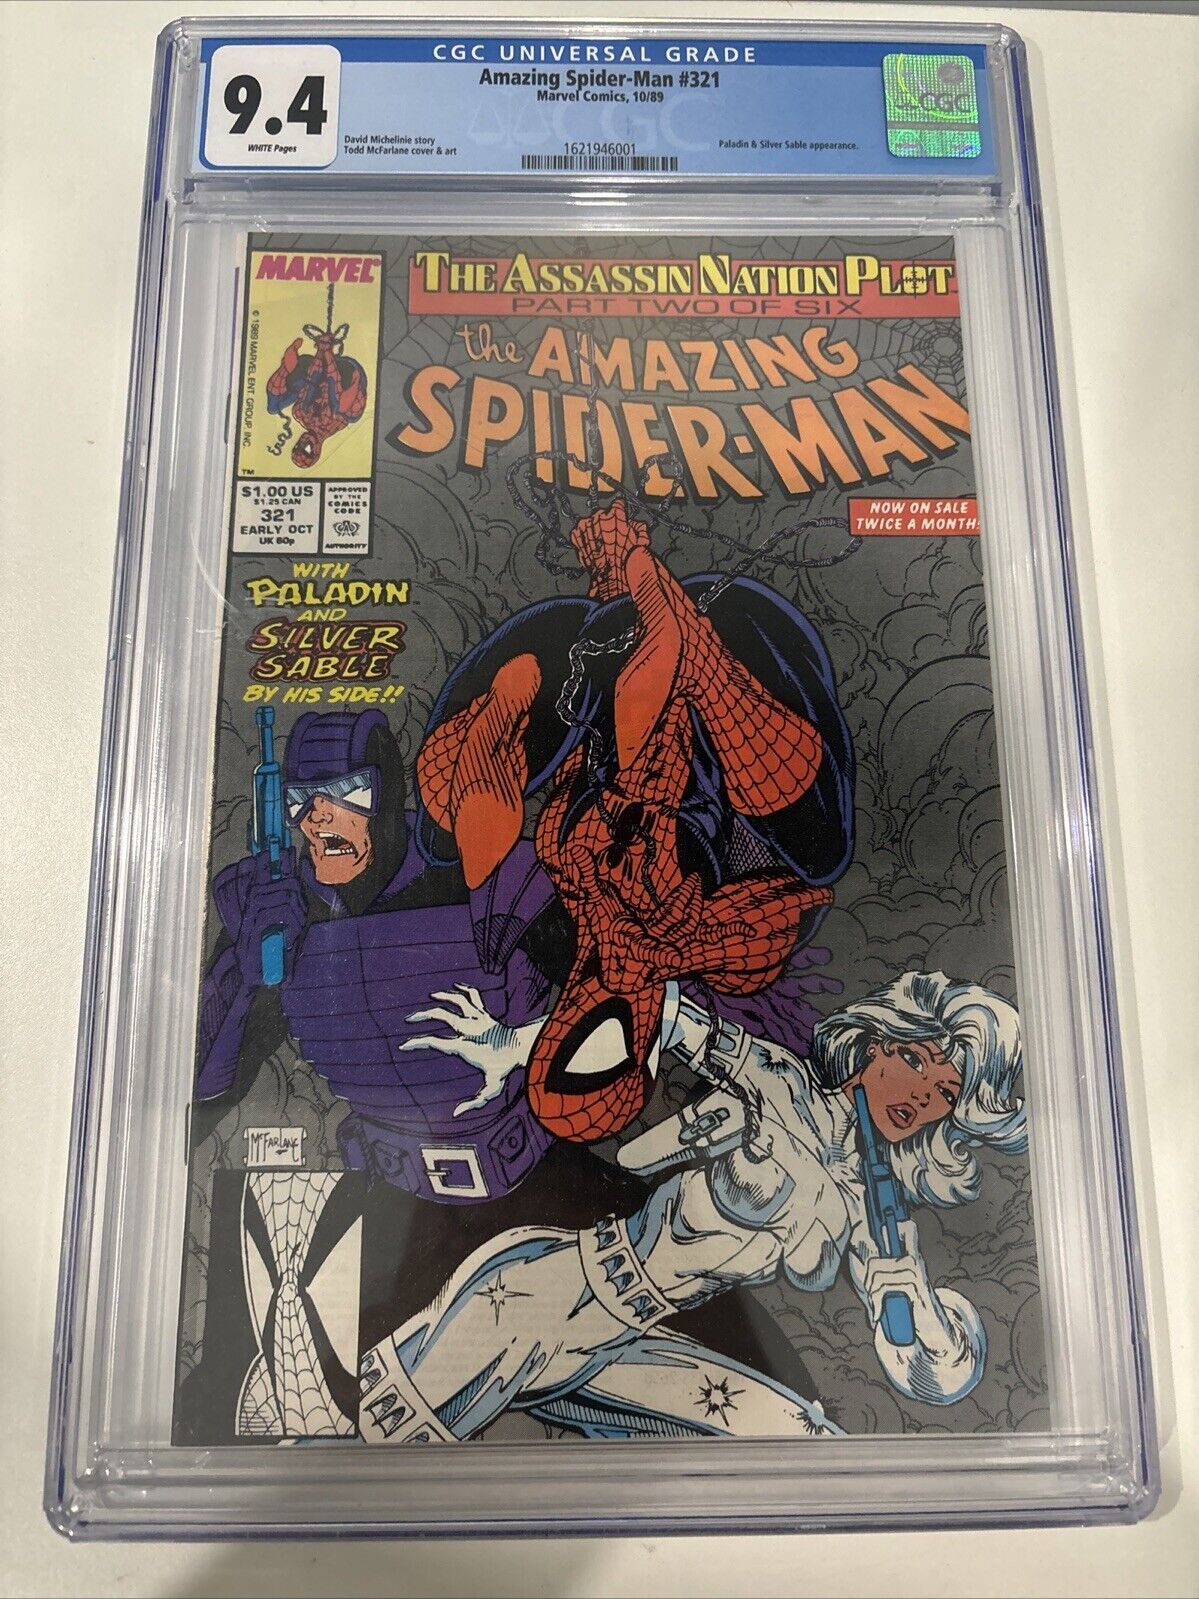 MARVEL COMICS Amazing Spider-Man #321 CGC 9.4 (1989)